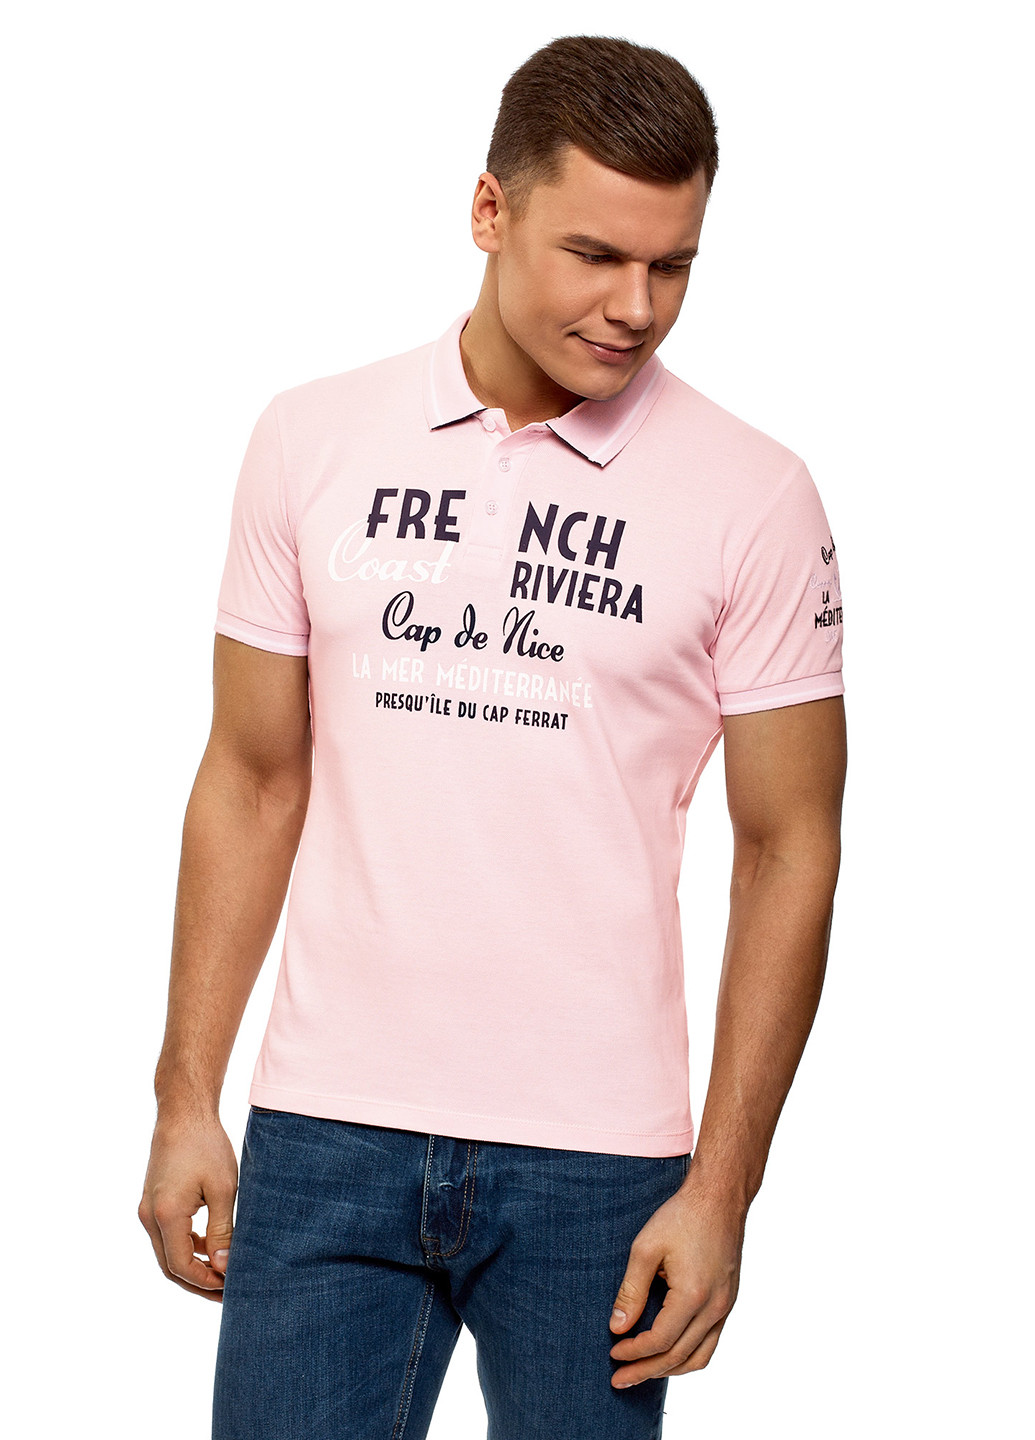 Розовая футболка-поло для мужчин Oodji с надписью